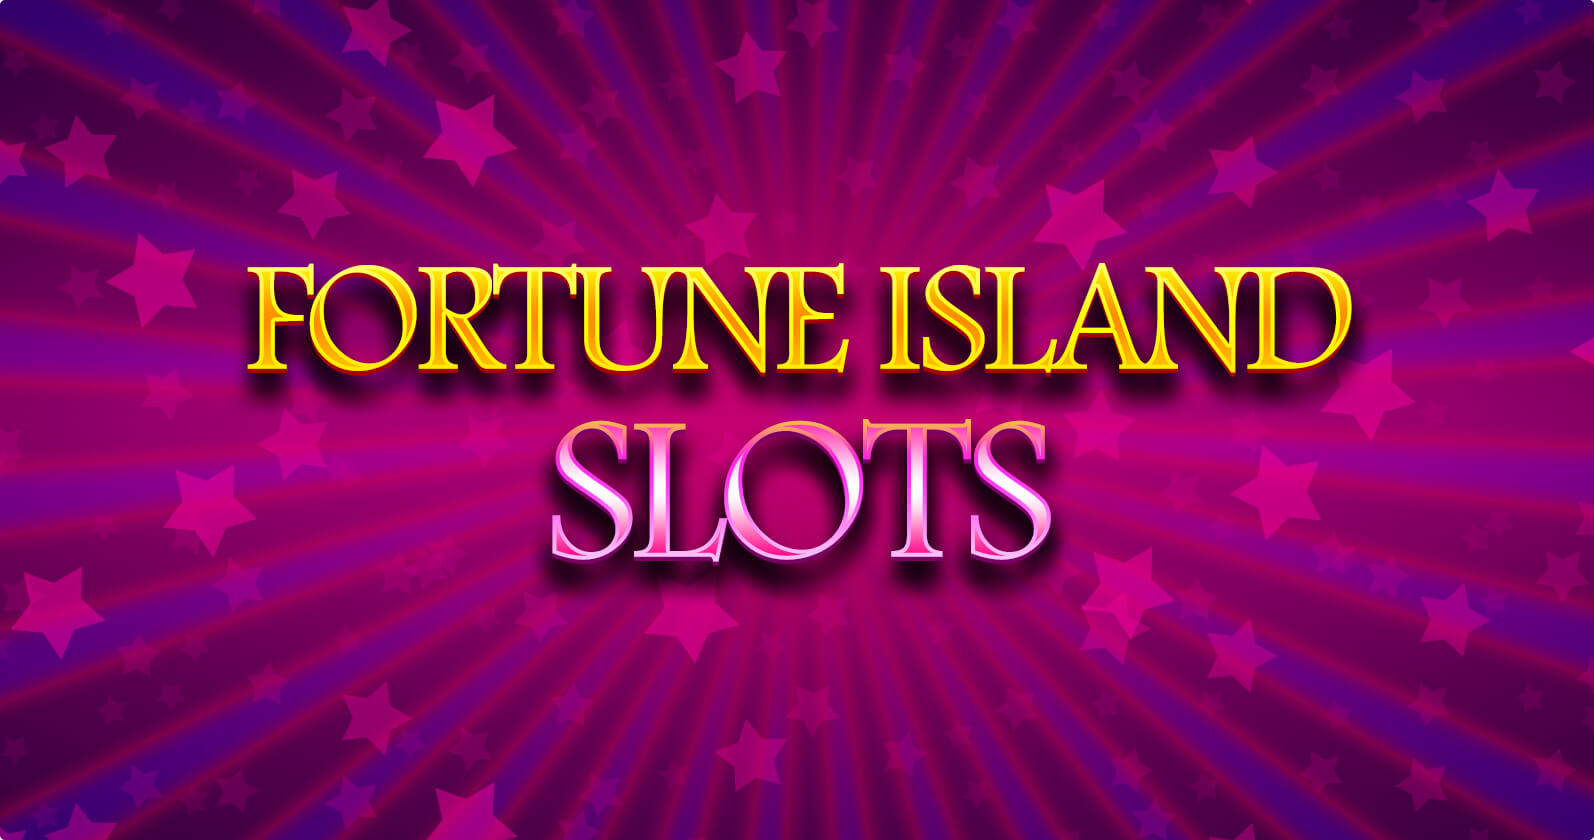 Fortune Island Slots - 2D Gambling Game Development